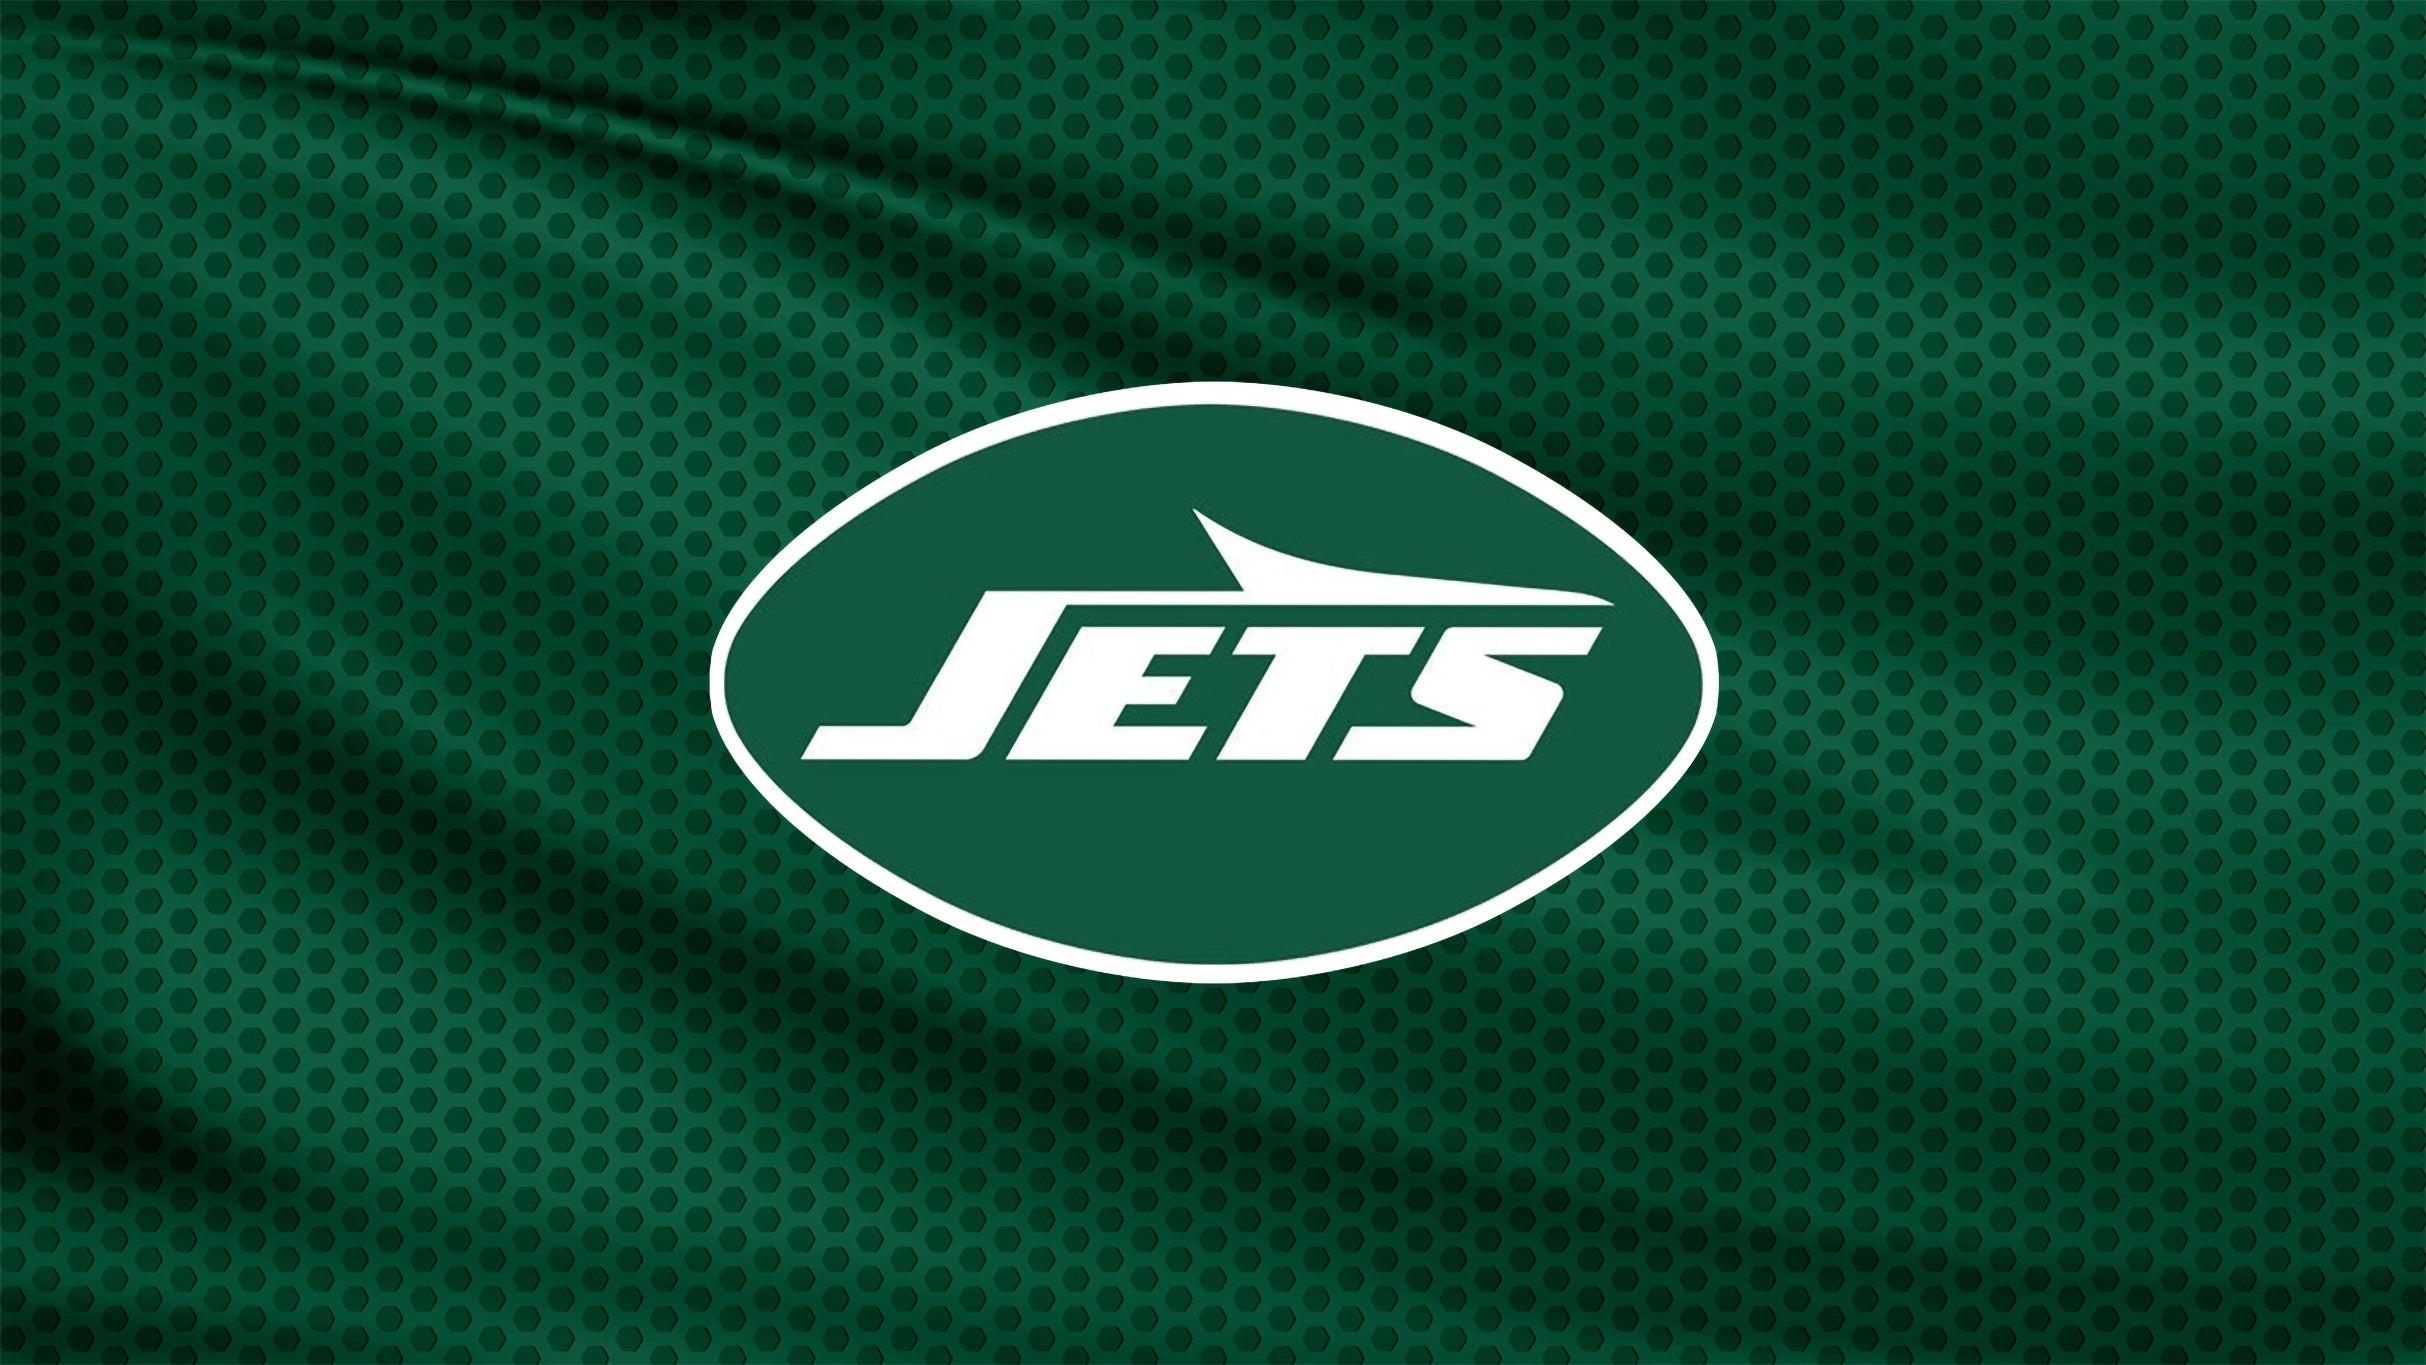 New York Jets vs. Houston Texans in East Rutherford promo photo for VISA presale offer code